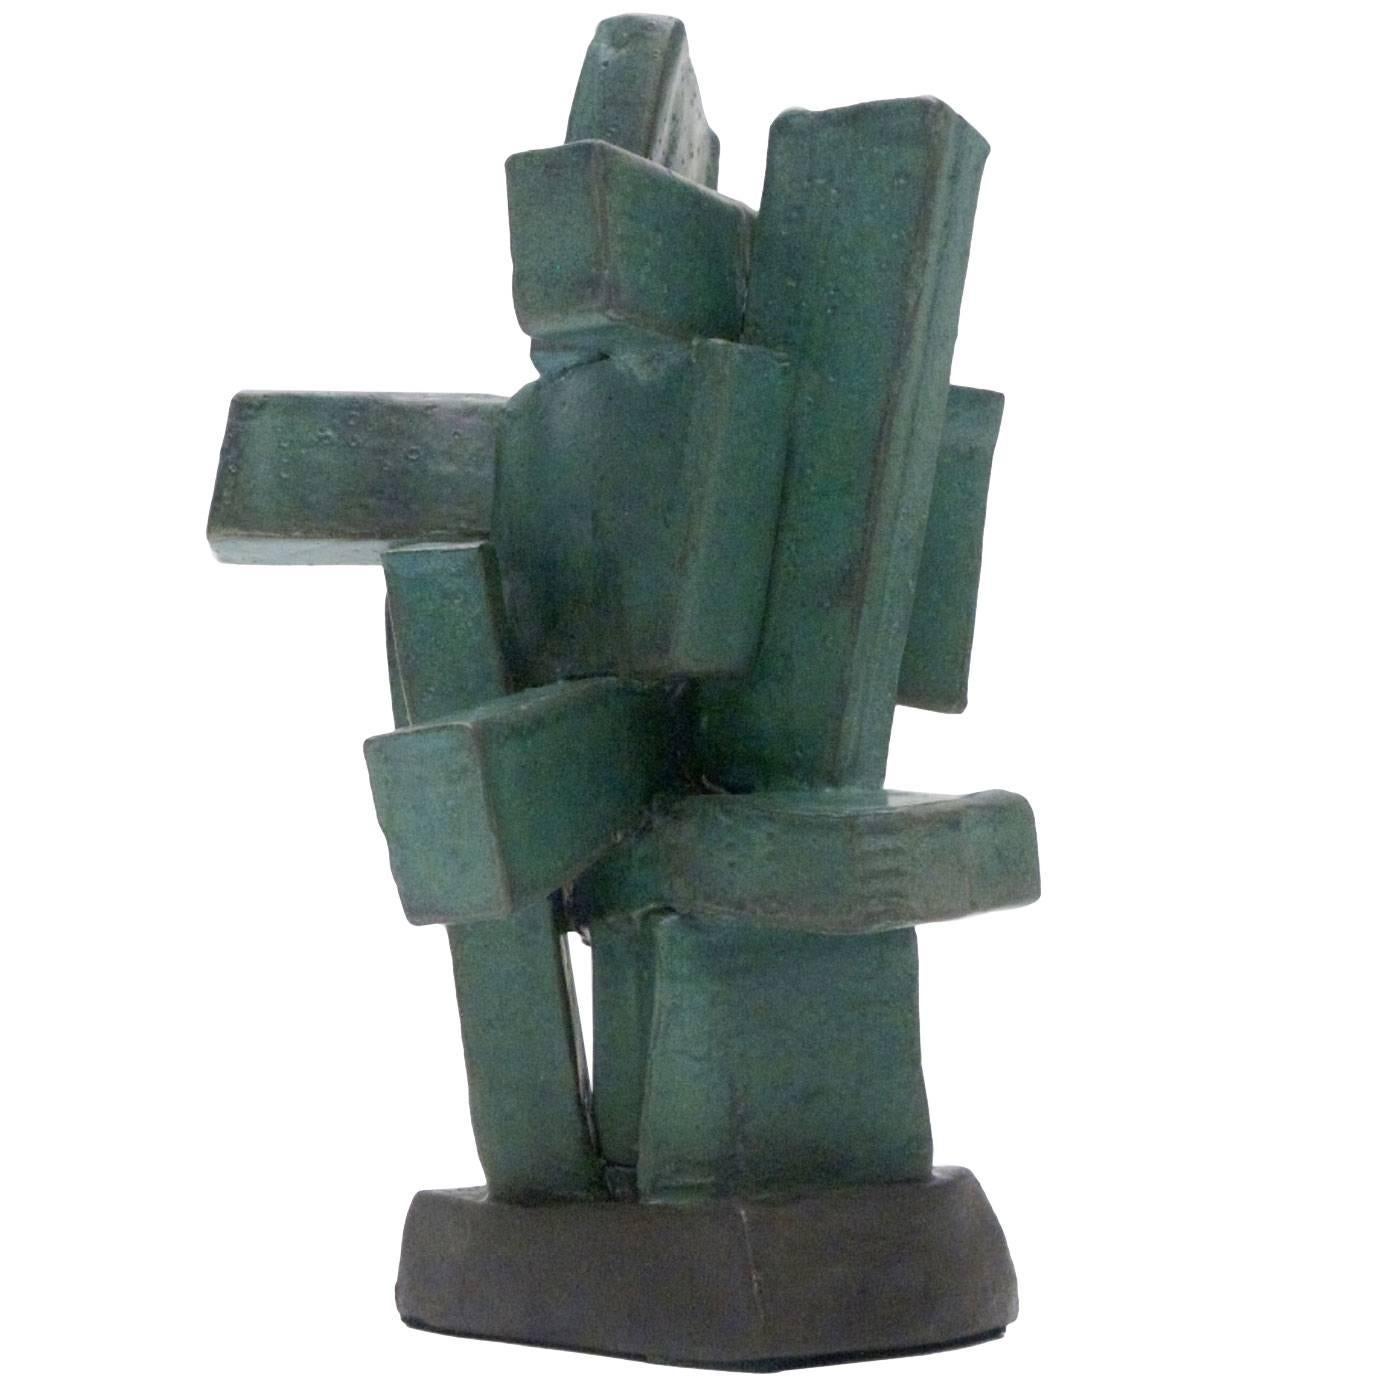 Modernist TOTEM Ceramic Sculpture in Organic Green Glaze by Judy Engel